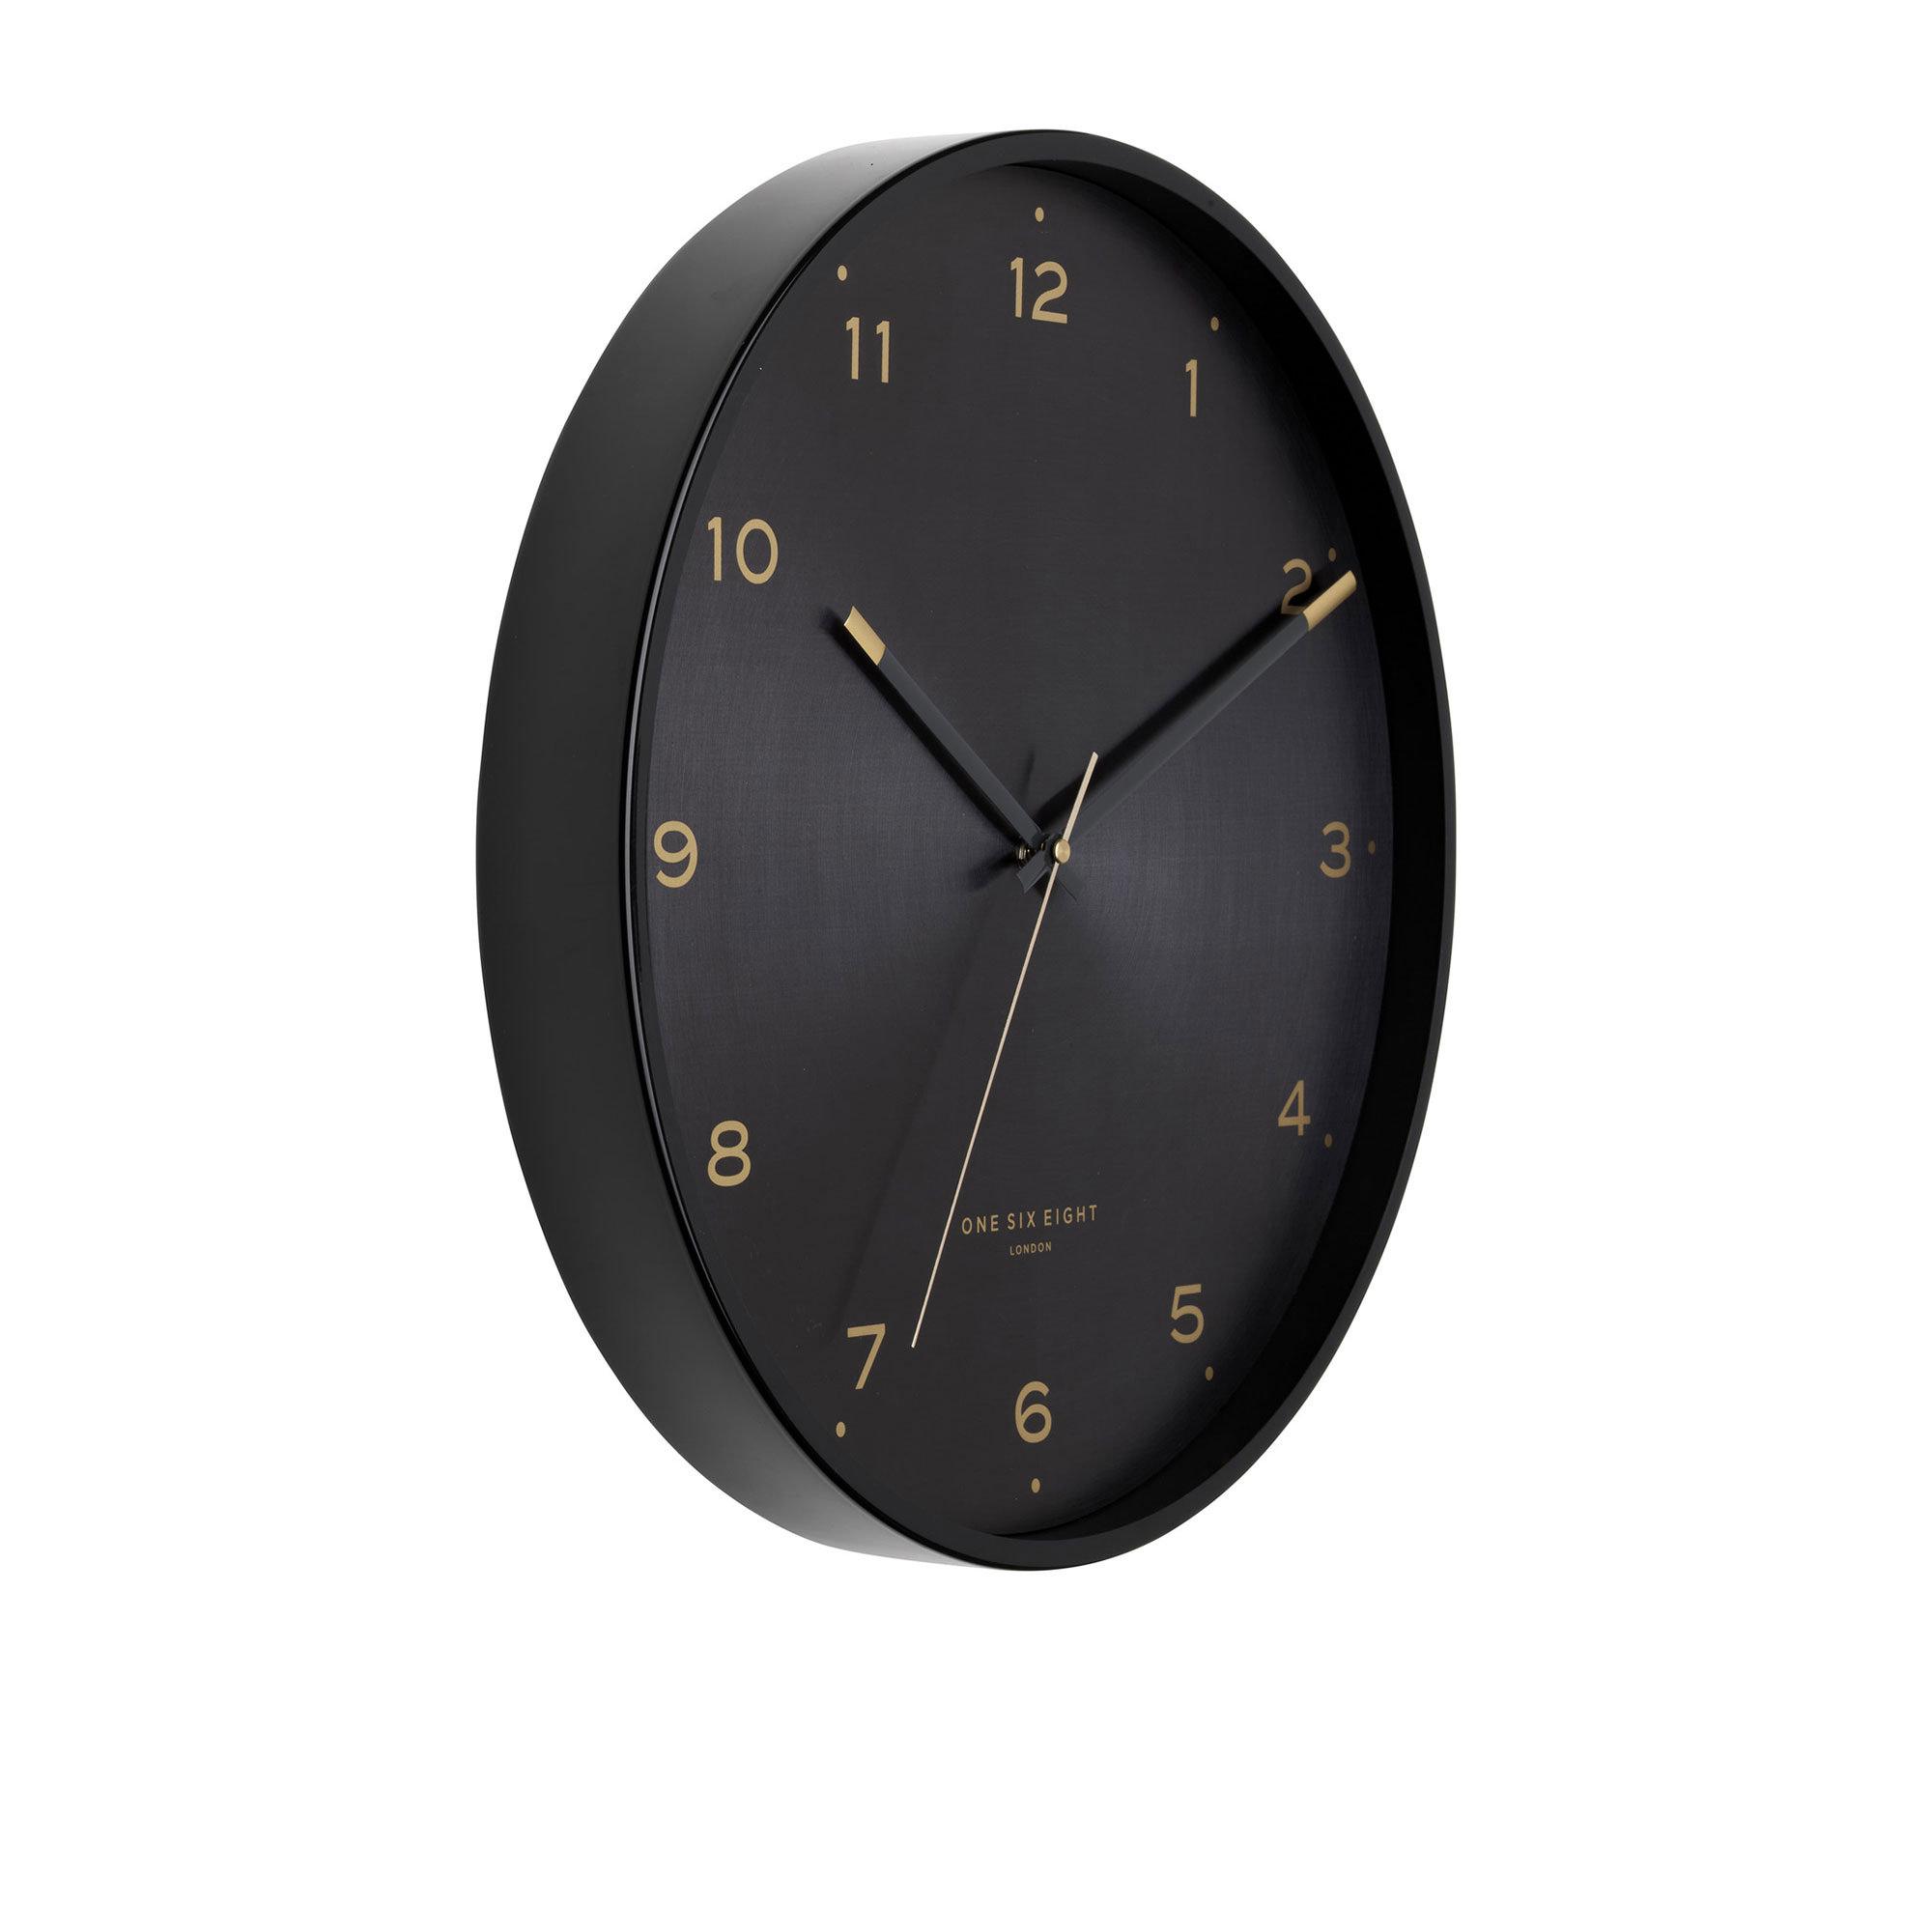 One Six Eight London Elsa Silent Wall Clock 40cm Black Image 2